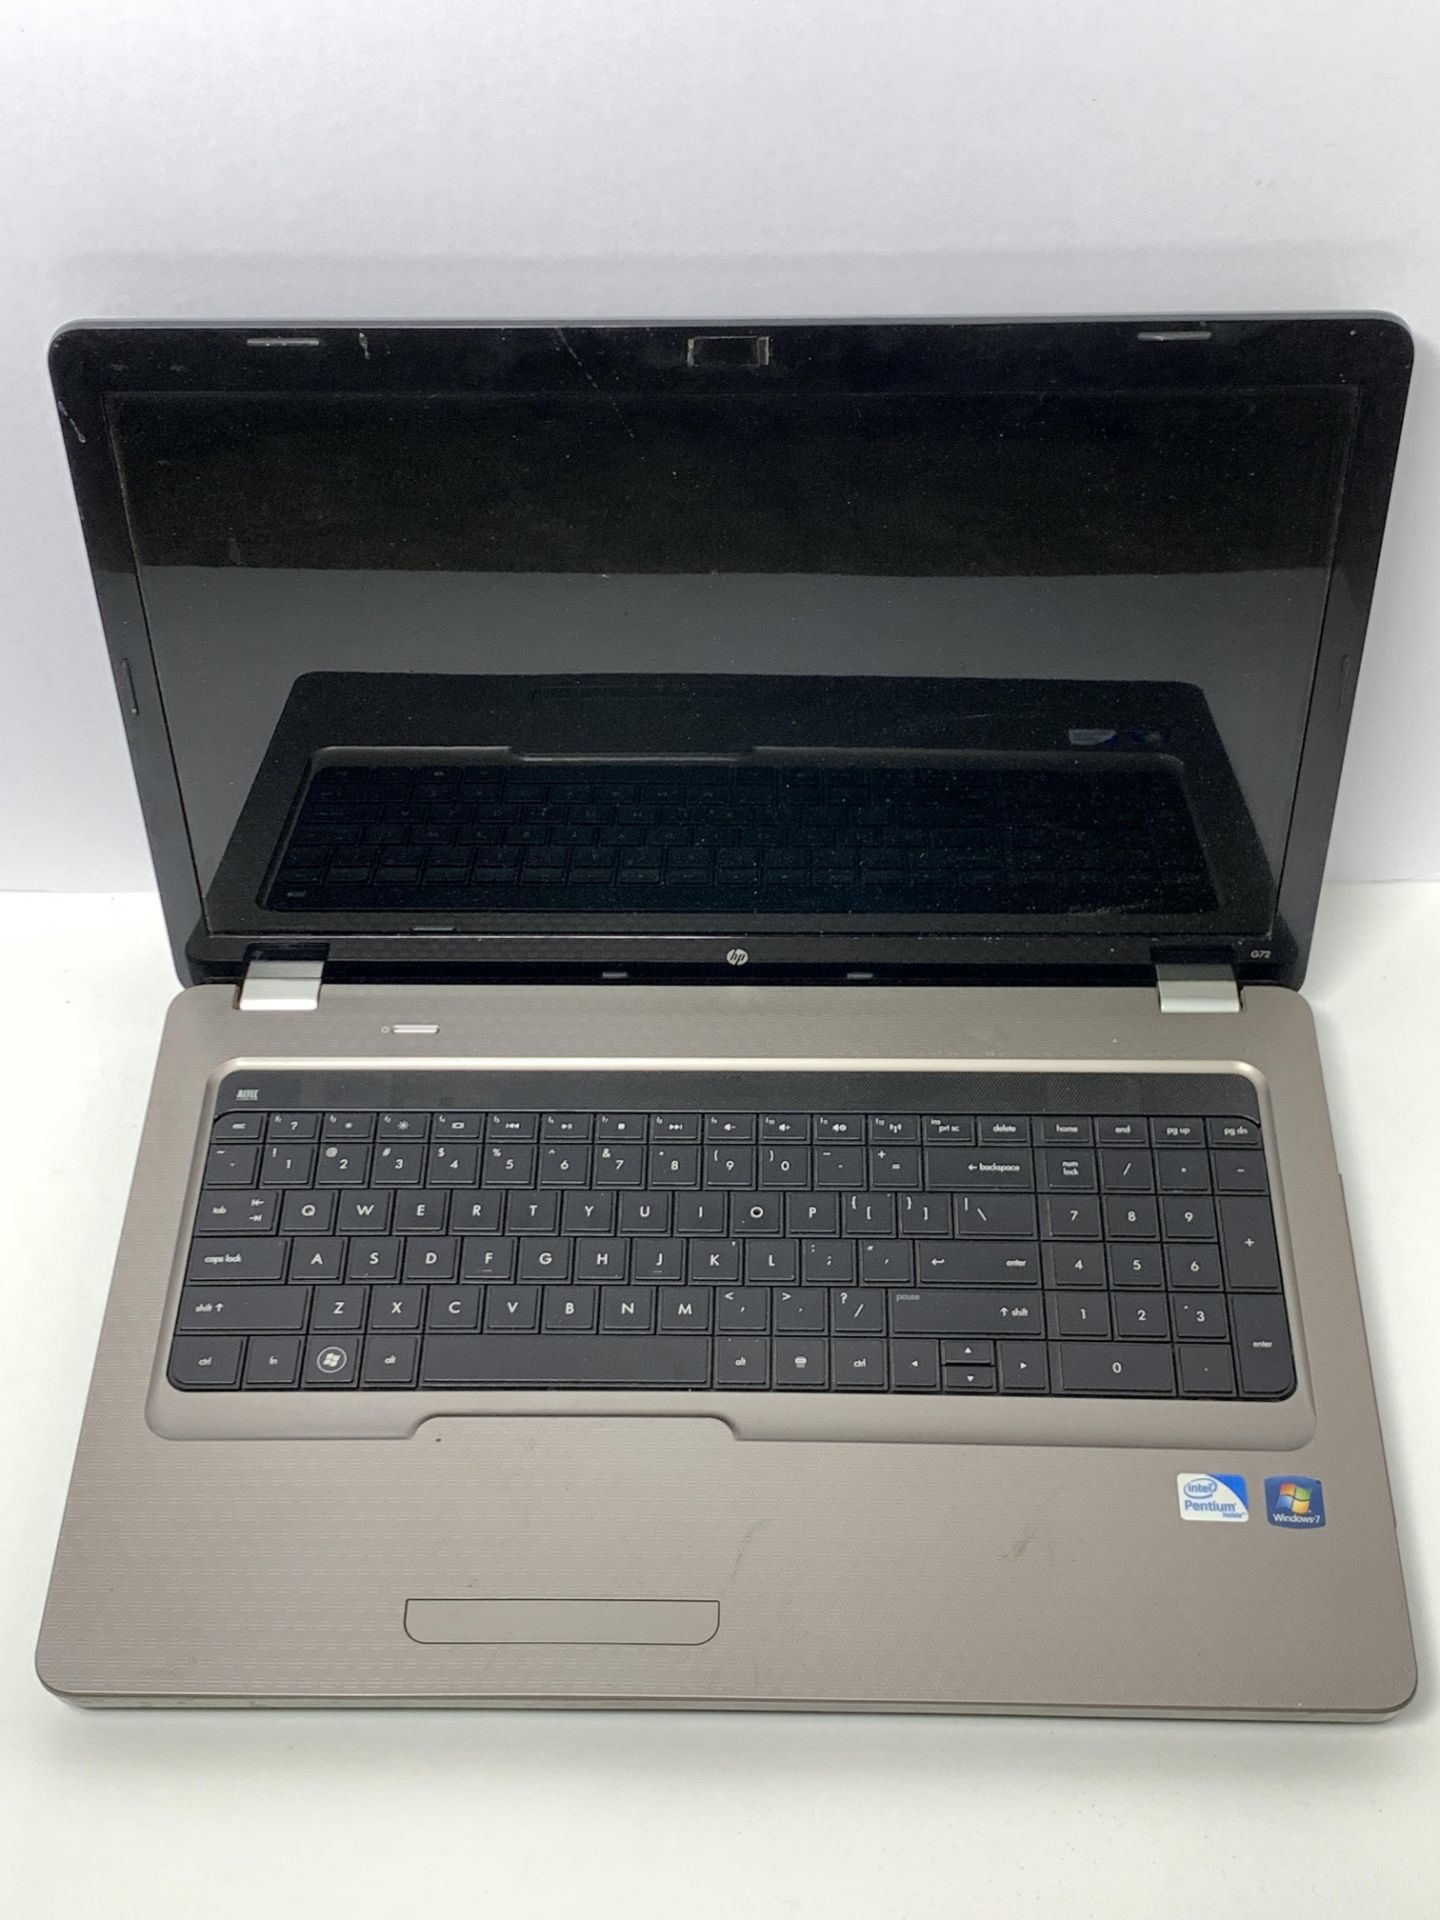 HP G72 Laptop Notebook, Windows 7 Intel Pentium